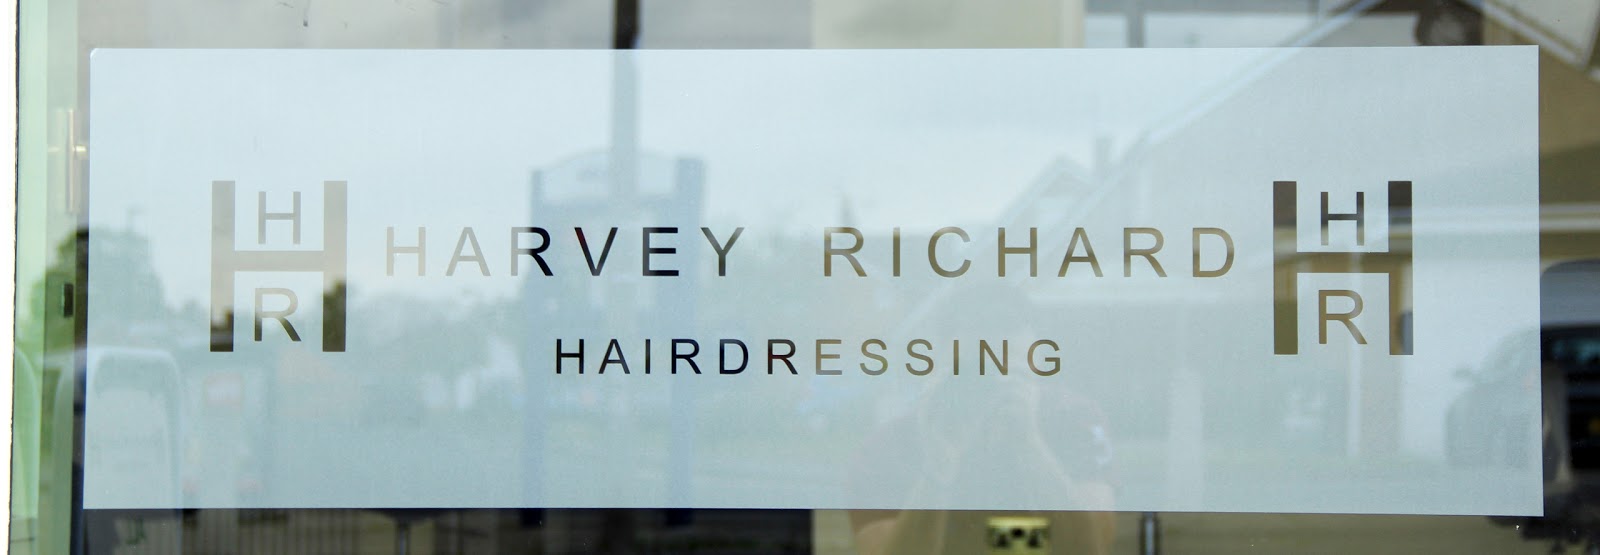 Harvey Richard Hairdressing